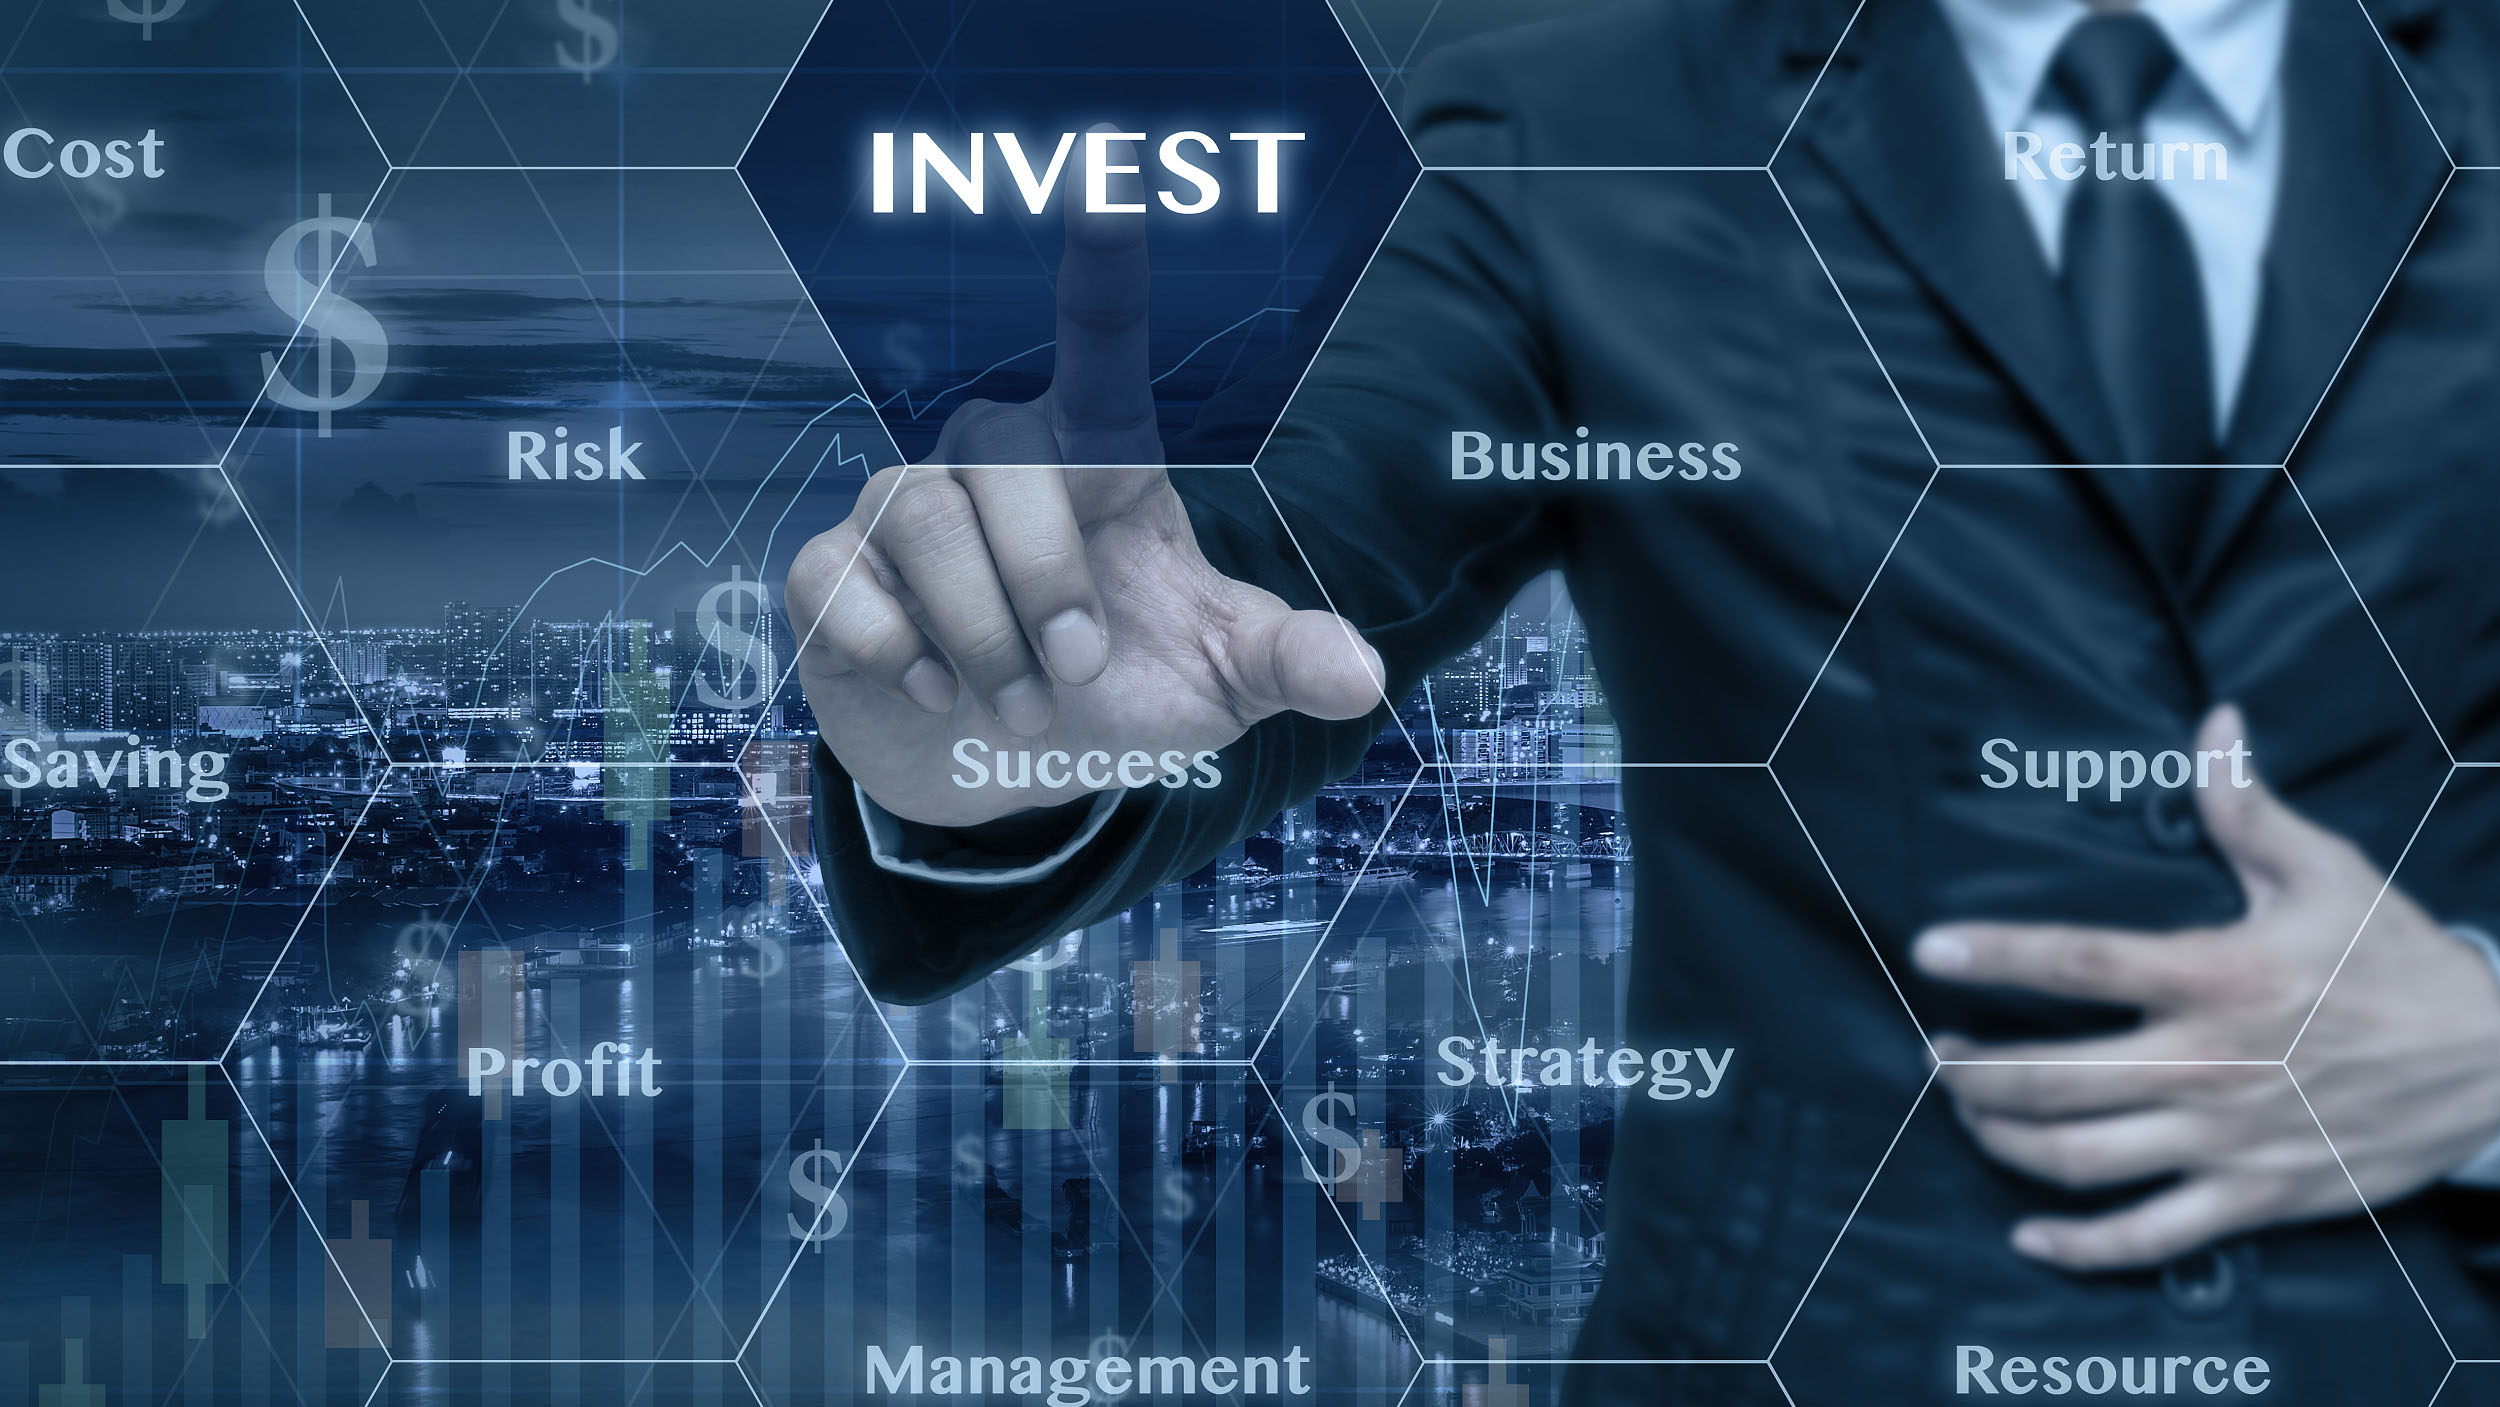 Business profits. Риски бизнеса. Инвестиционные проекты в интернете. Риски инвестора. Инвестиции в интернет проекты.